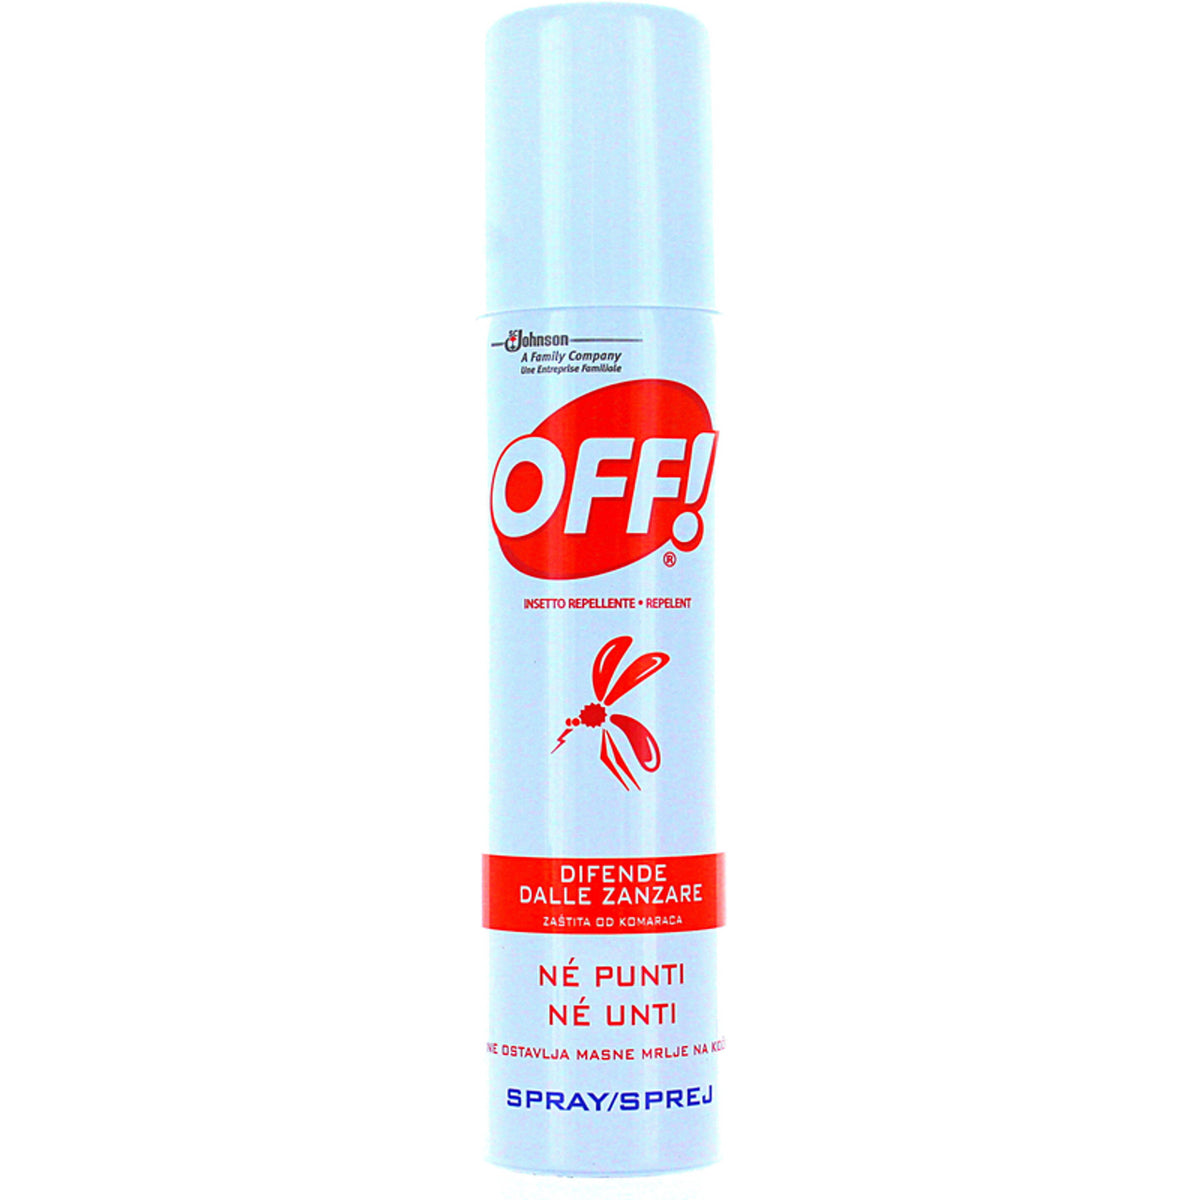 Off! 100 ml spray anti -priest repellent